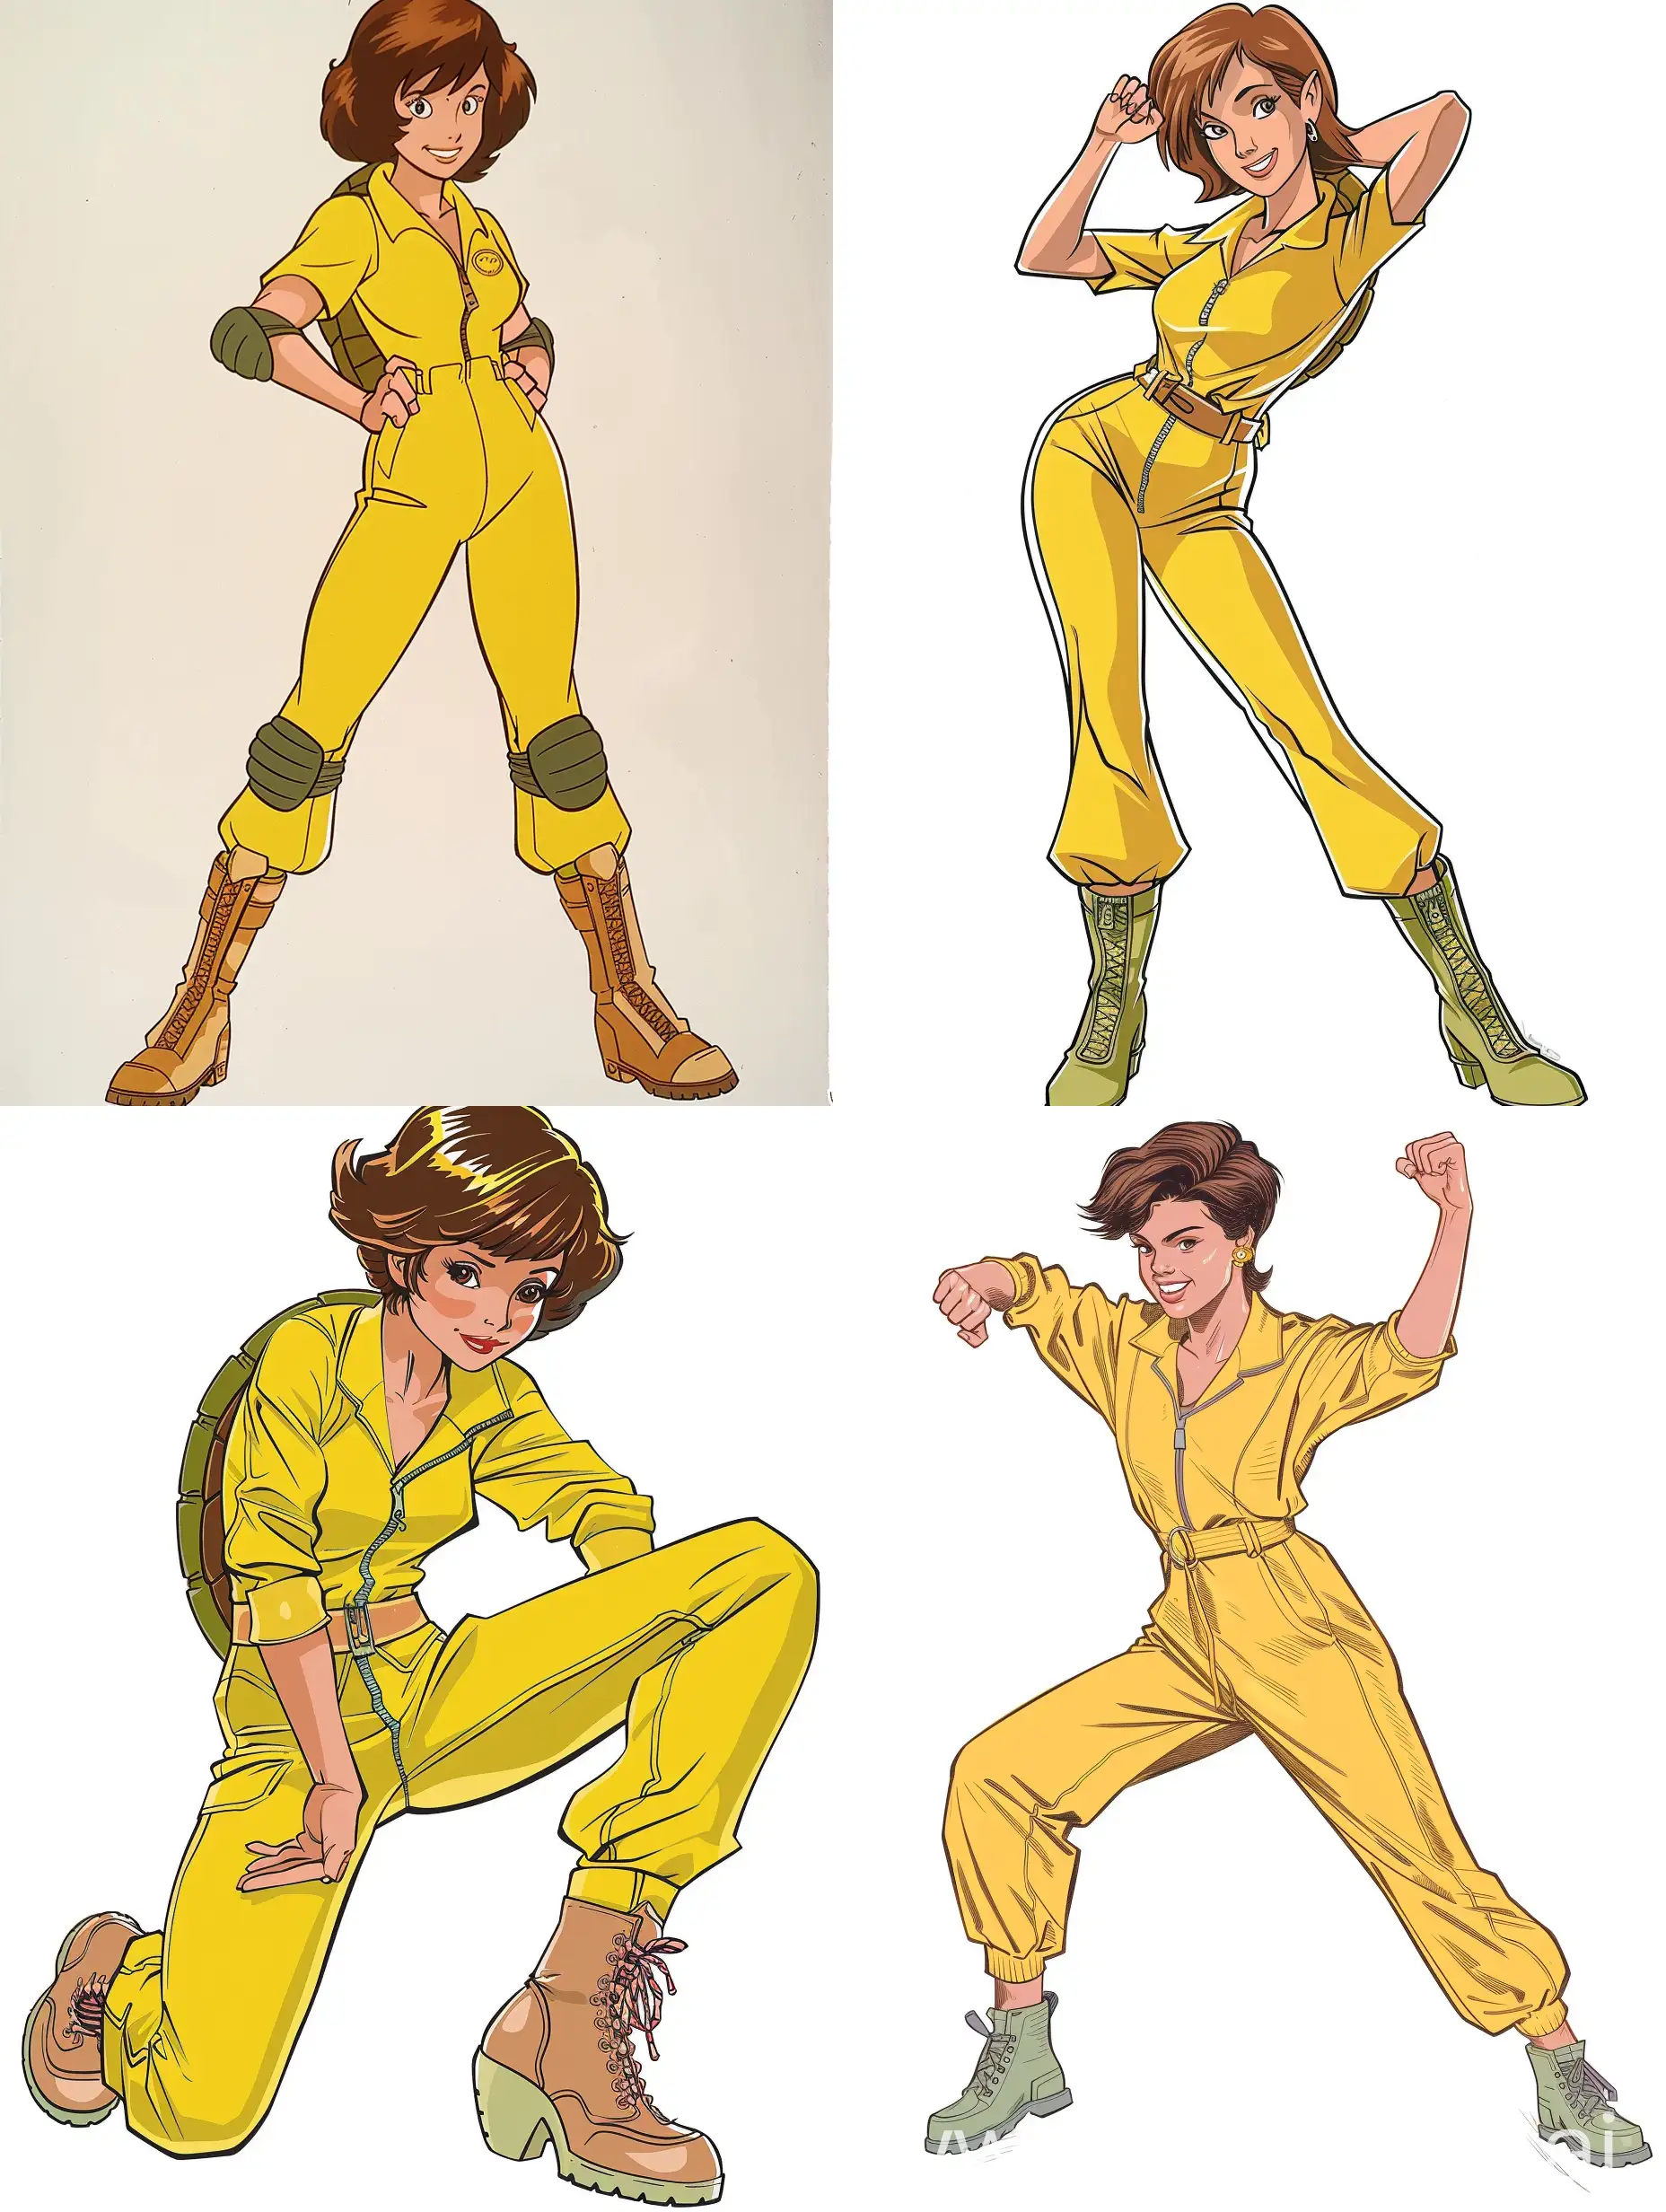 April O’Neil from Teenage Mutant Ninja Turtles 1987 Cartoon, Short Hair, Yellow Jumpsuit, Zipper, While Boots, Posing, Cartoon Style, 1980s